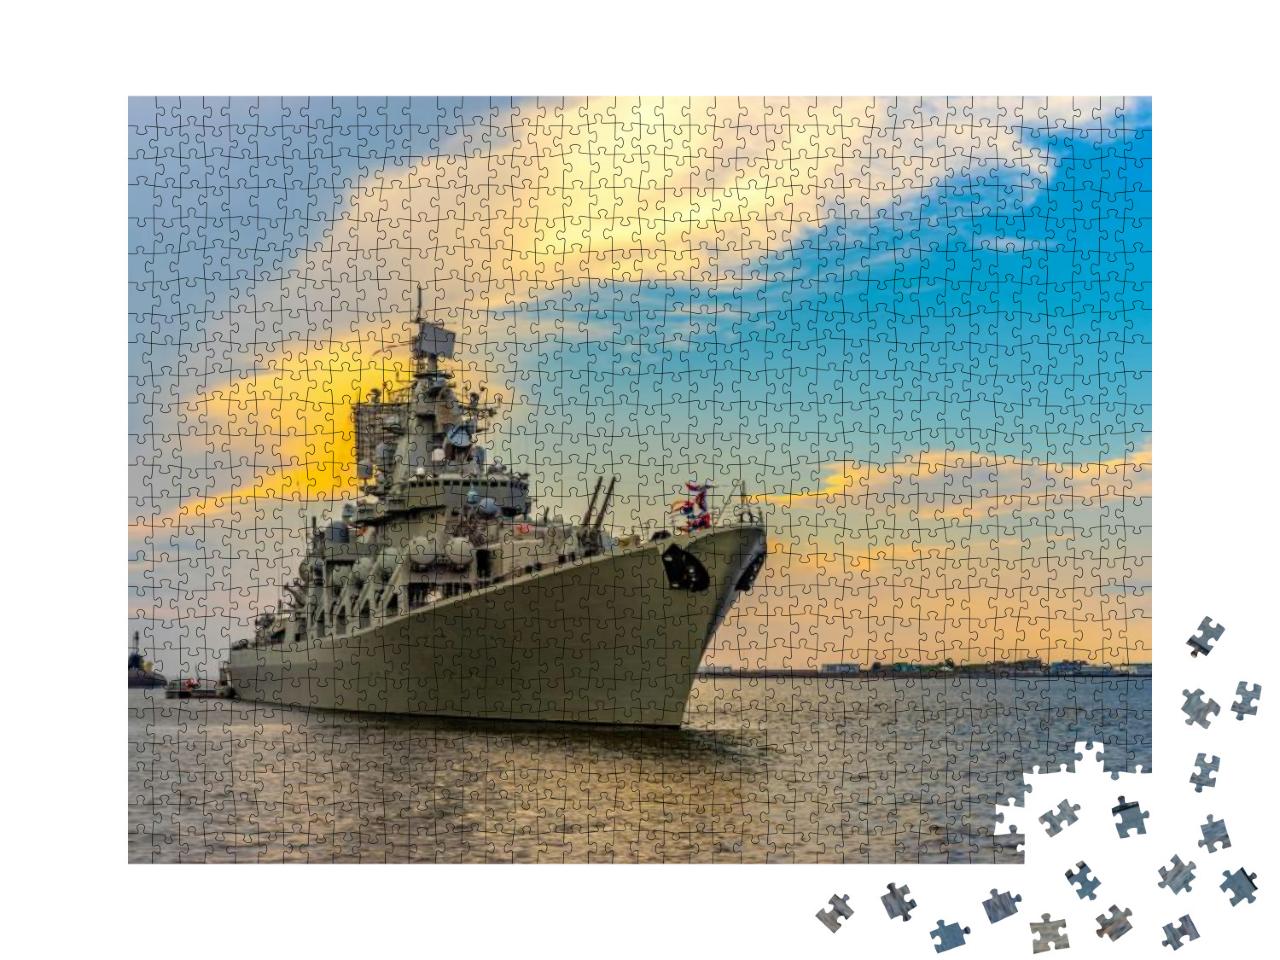 Puzzle 1000 Teile „Militärschiff“